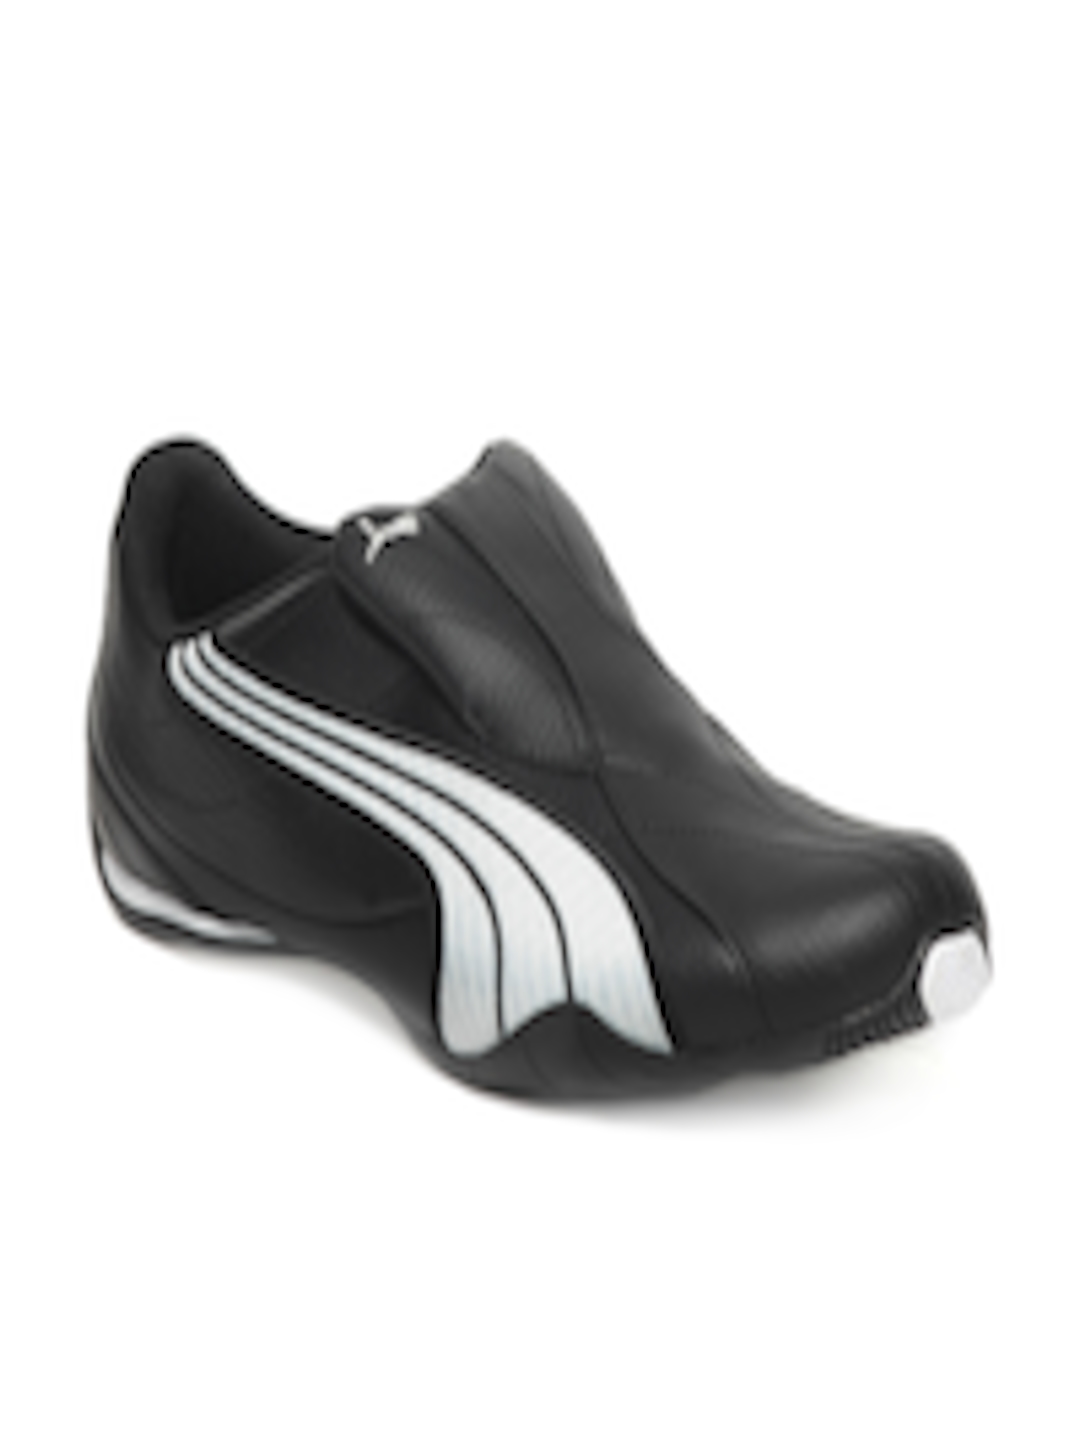 Buy Puma Men Black Tergament Shoes - Casual Shoes for Men 67322 | Myntra